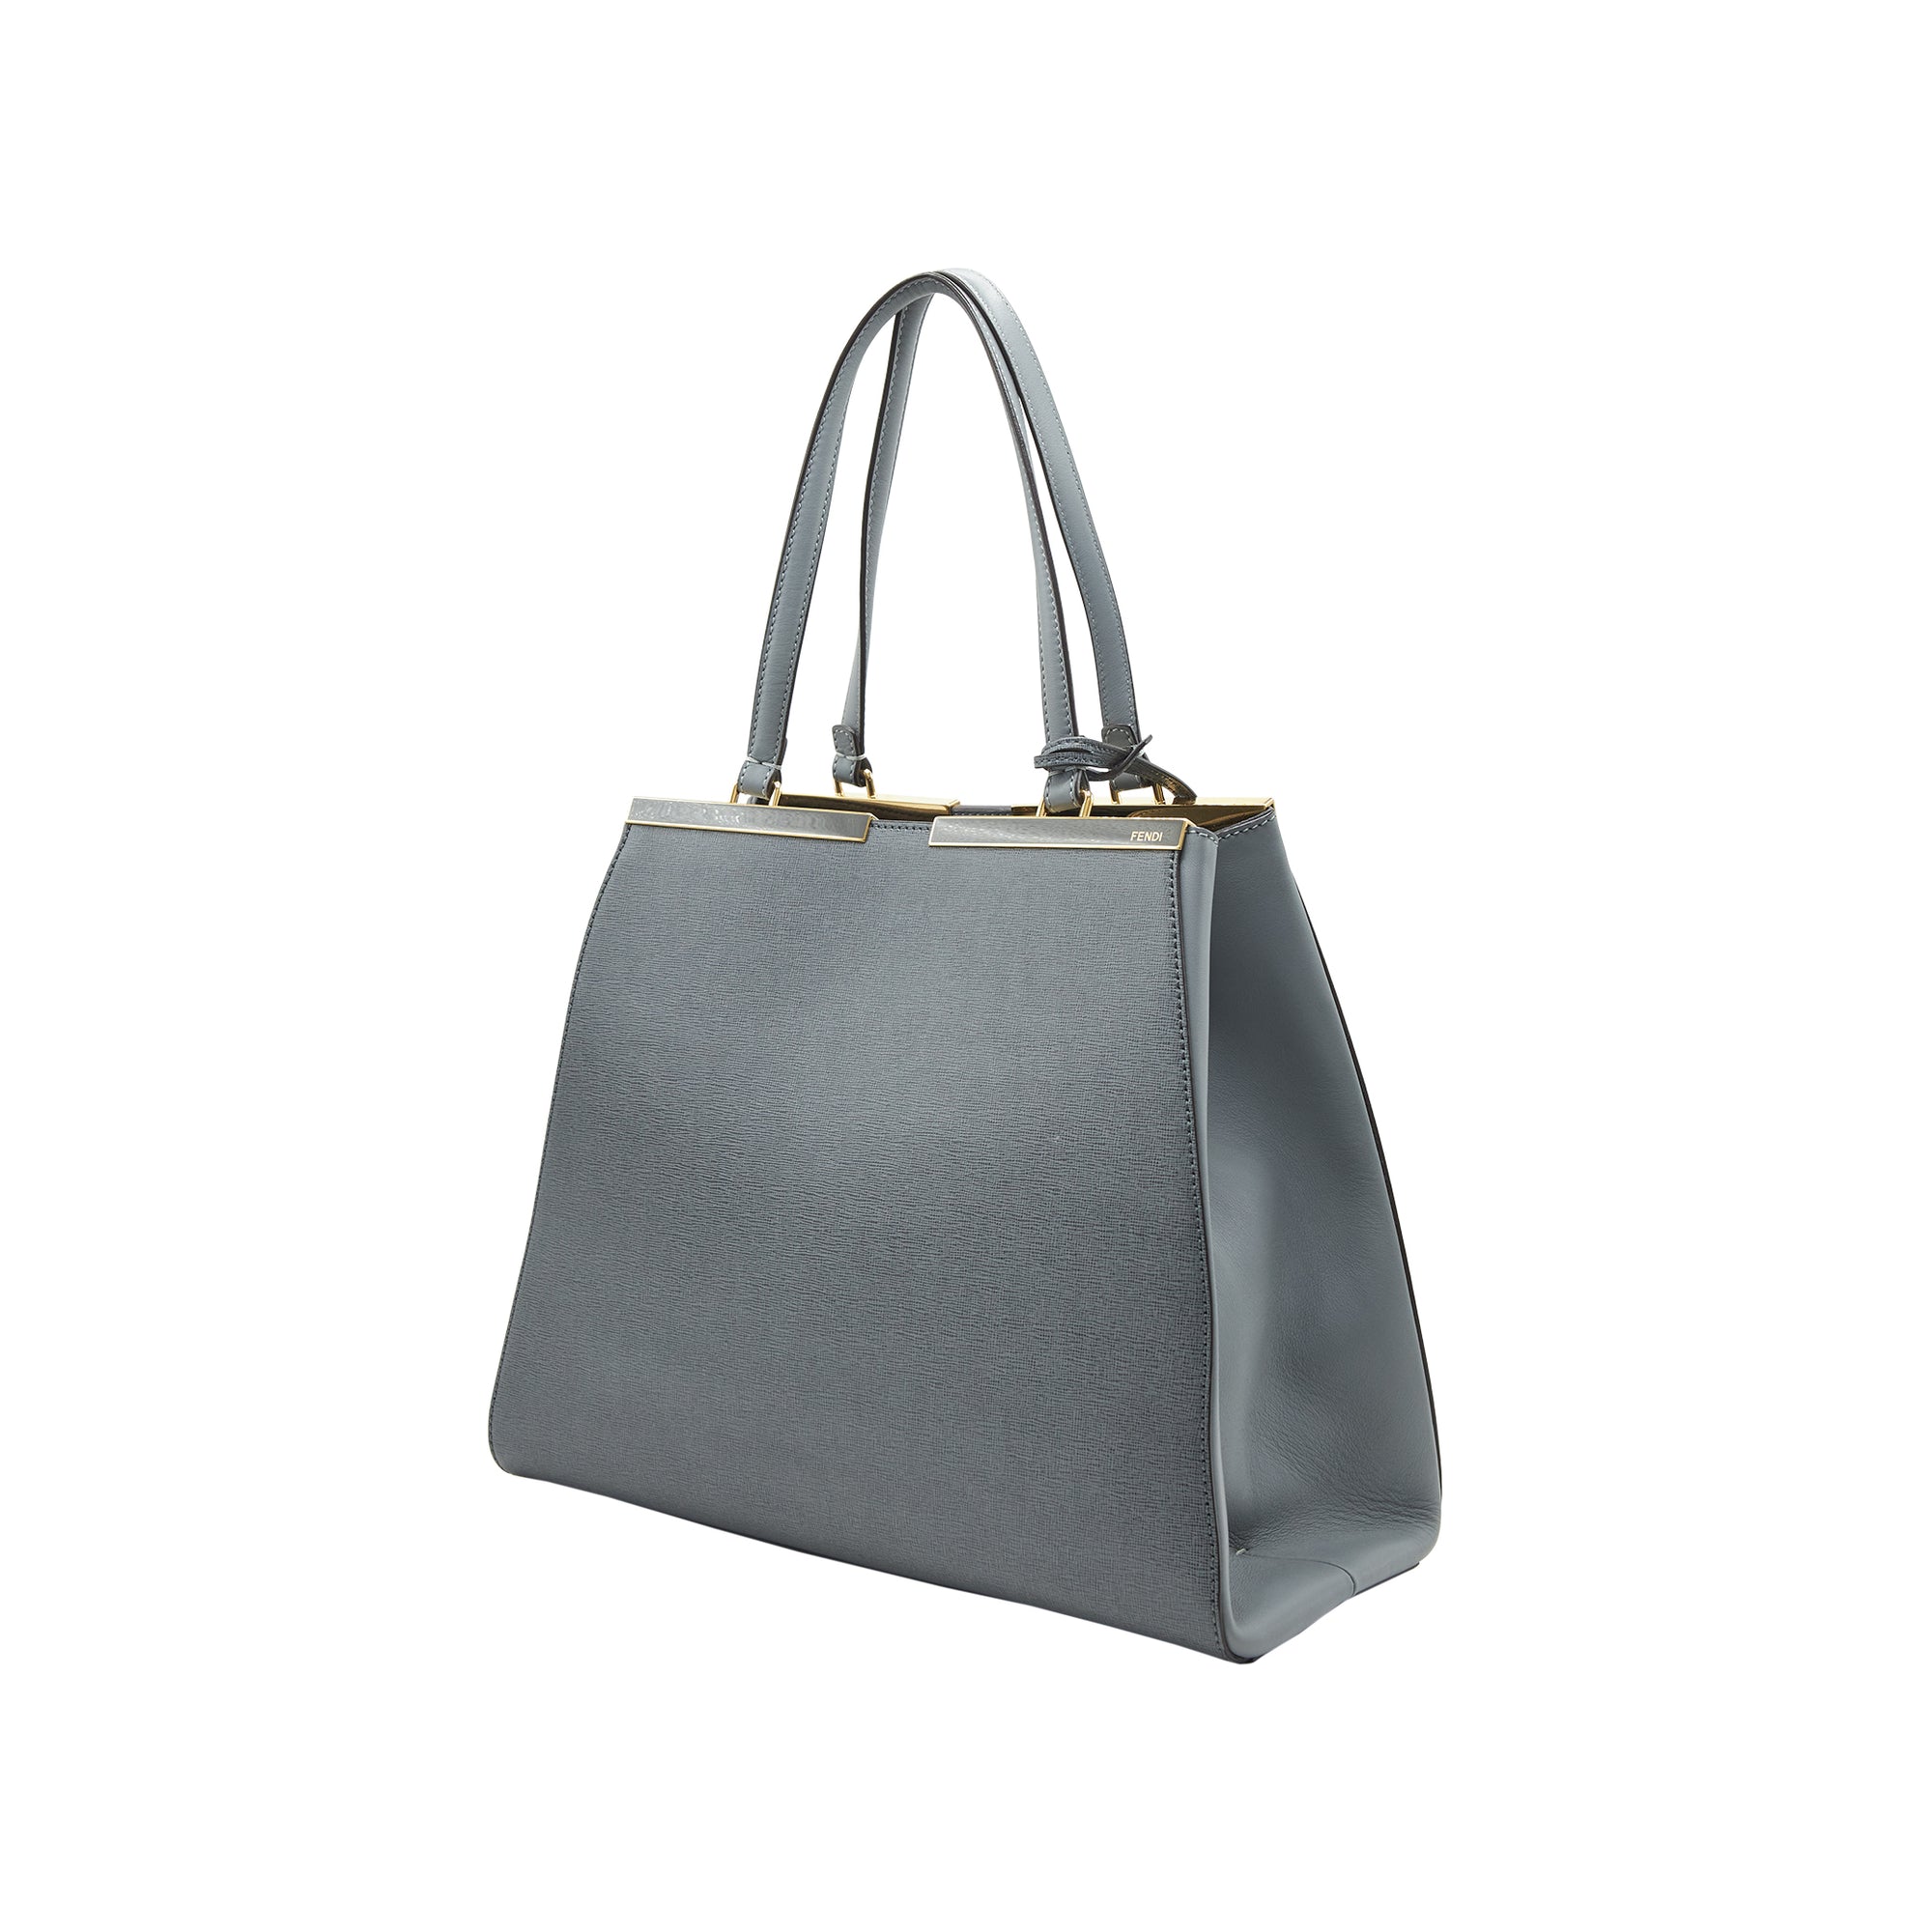 Fendi 3Jours leather handbag